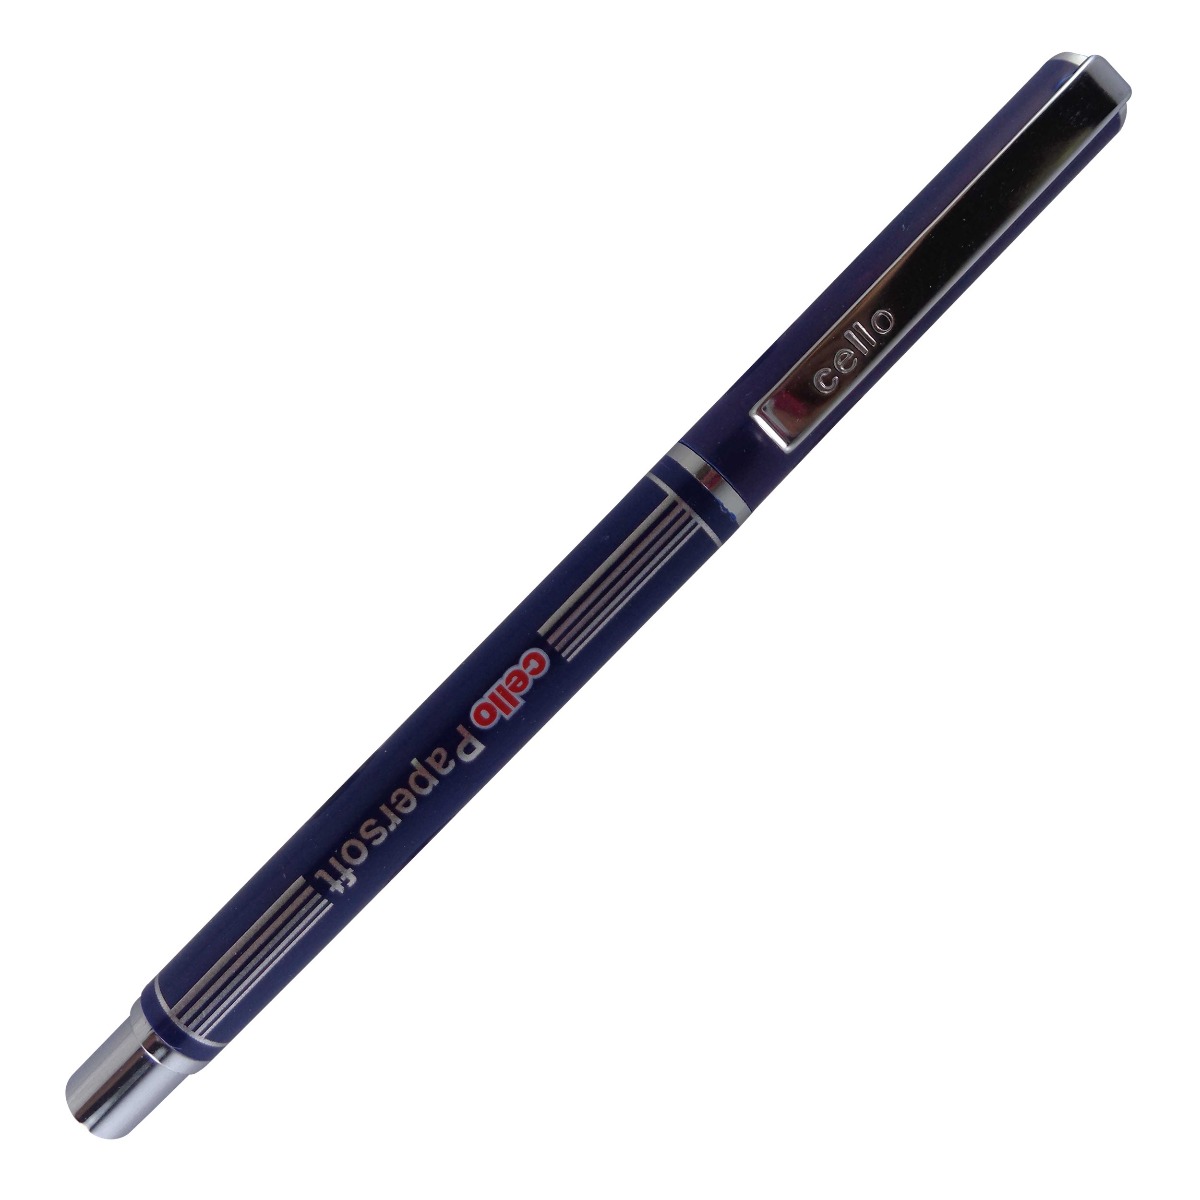 Cello Model: 14905 Paper soft Blue color body with silver clip black ink fine tip cap type ball pen